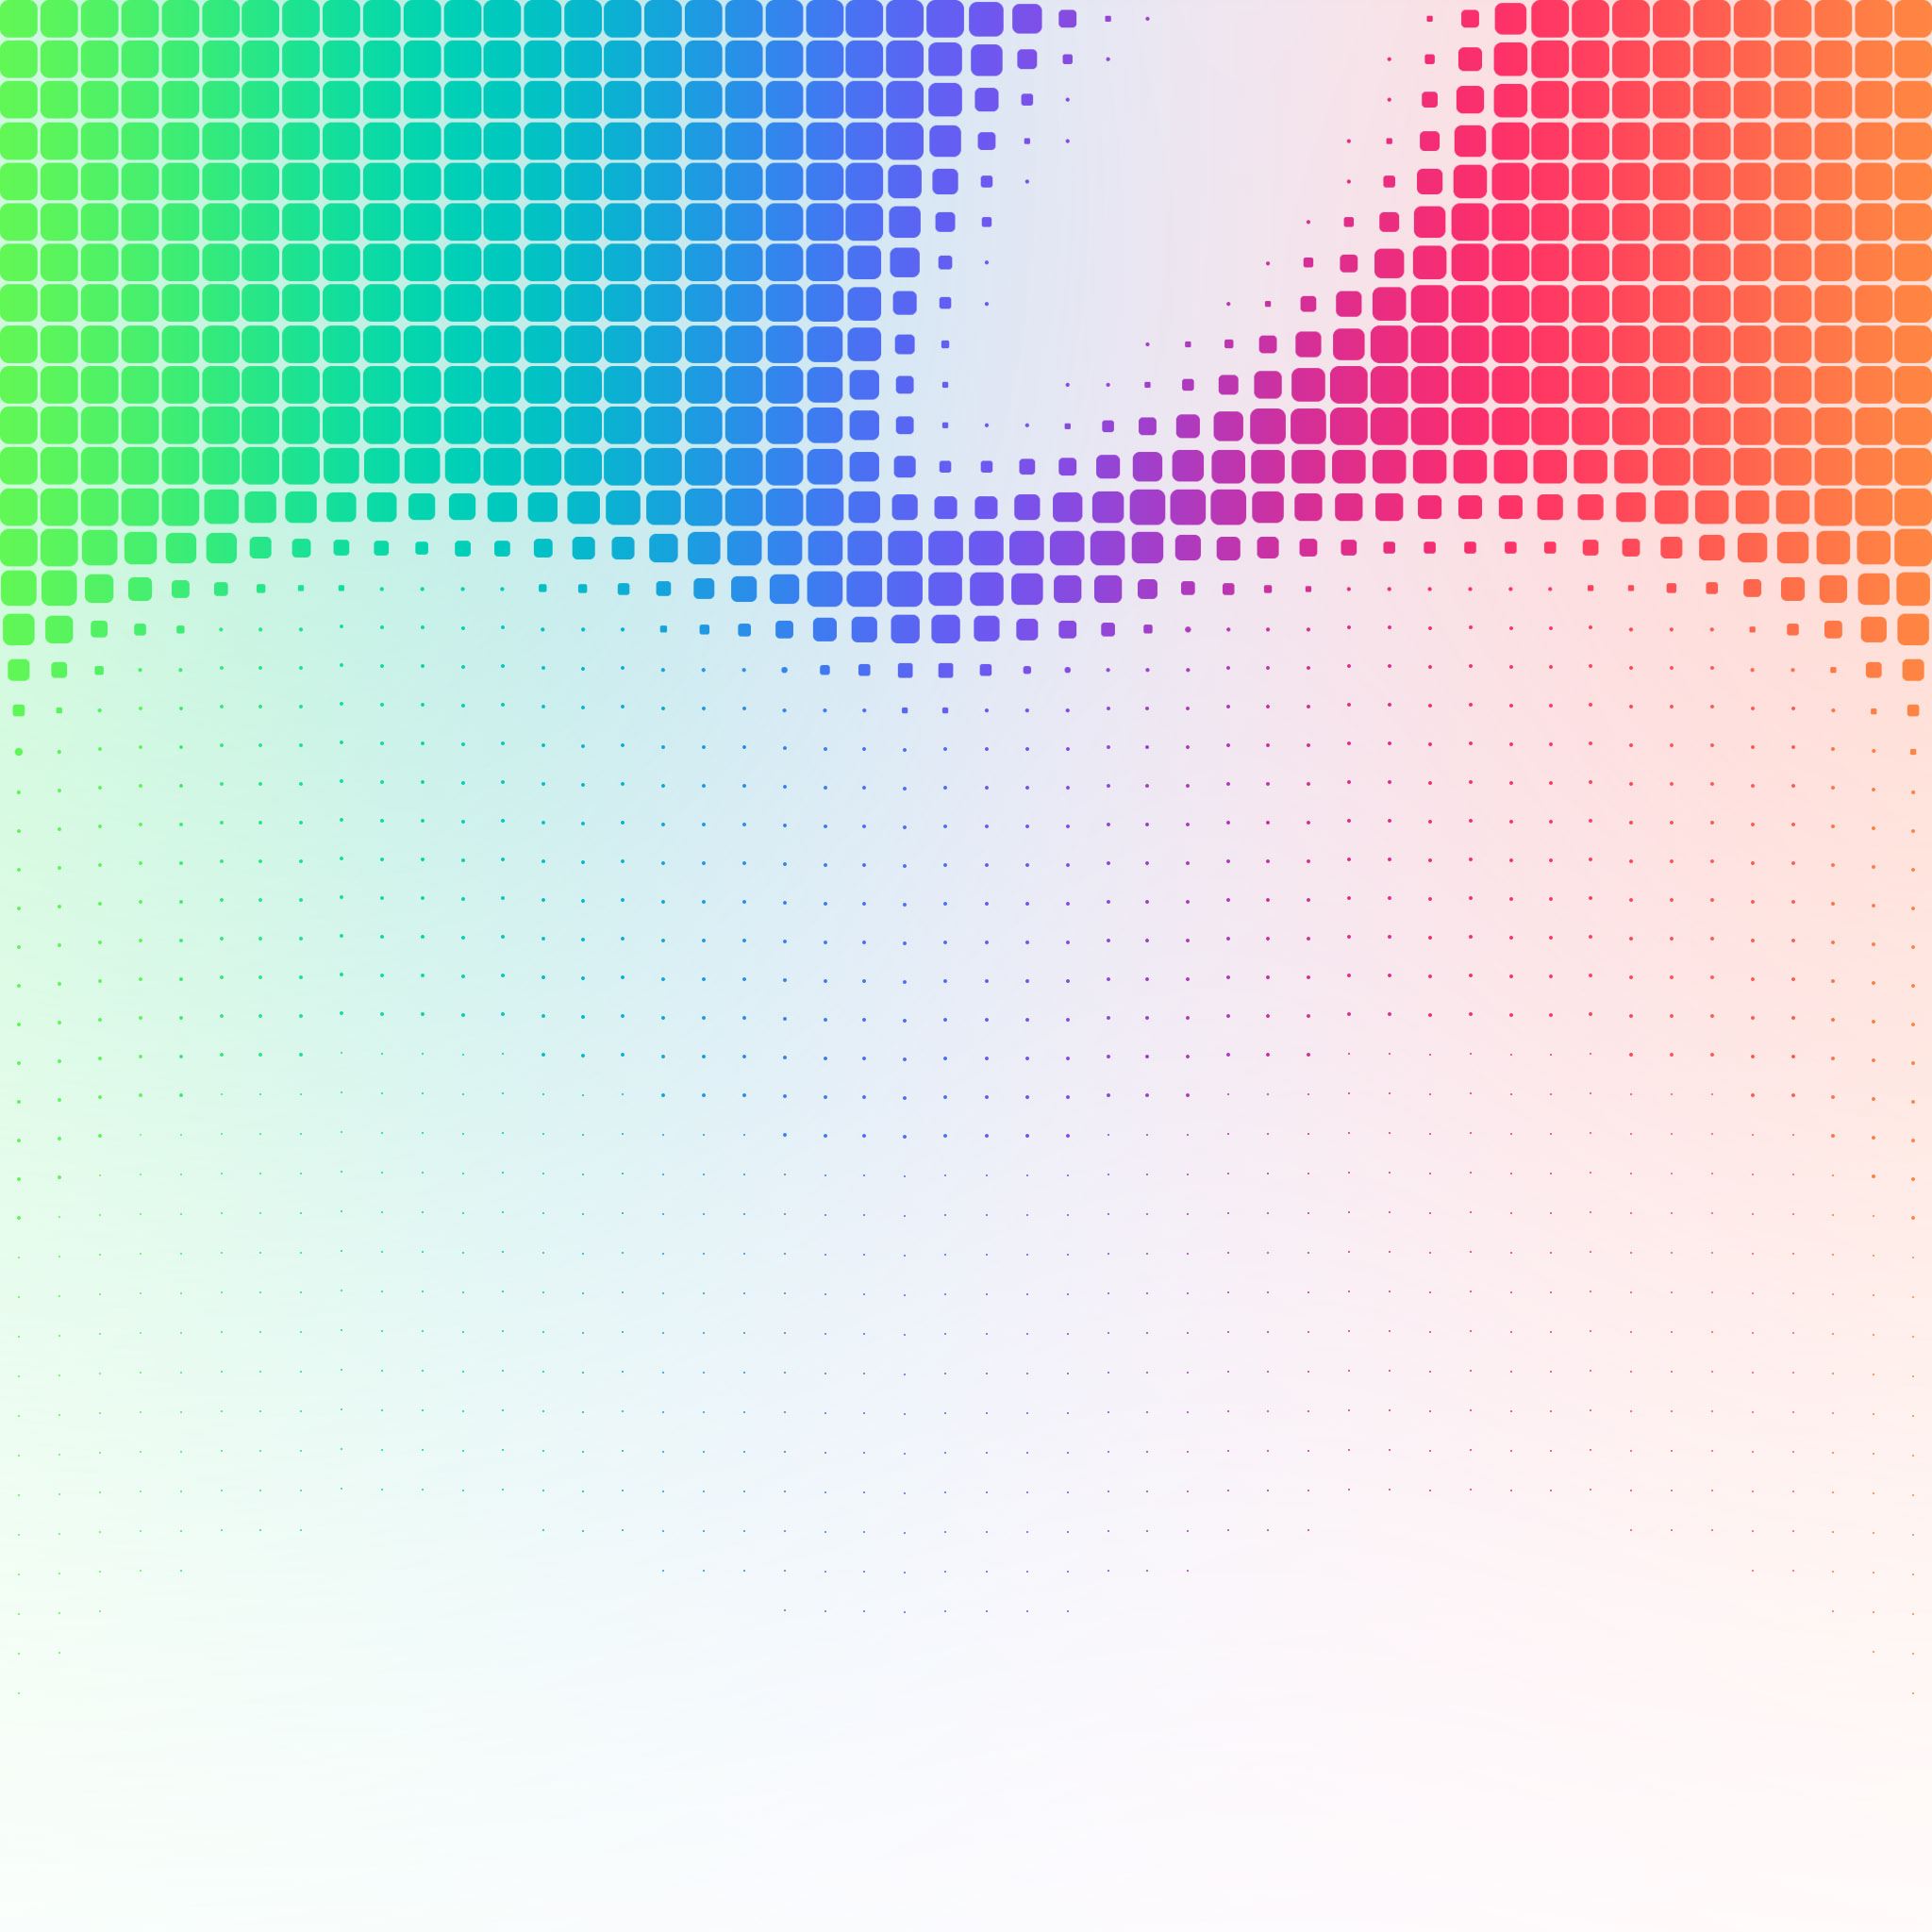 2014 Ios8 iPad Retina iPad Air wallpaper 